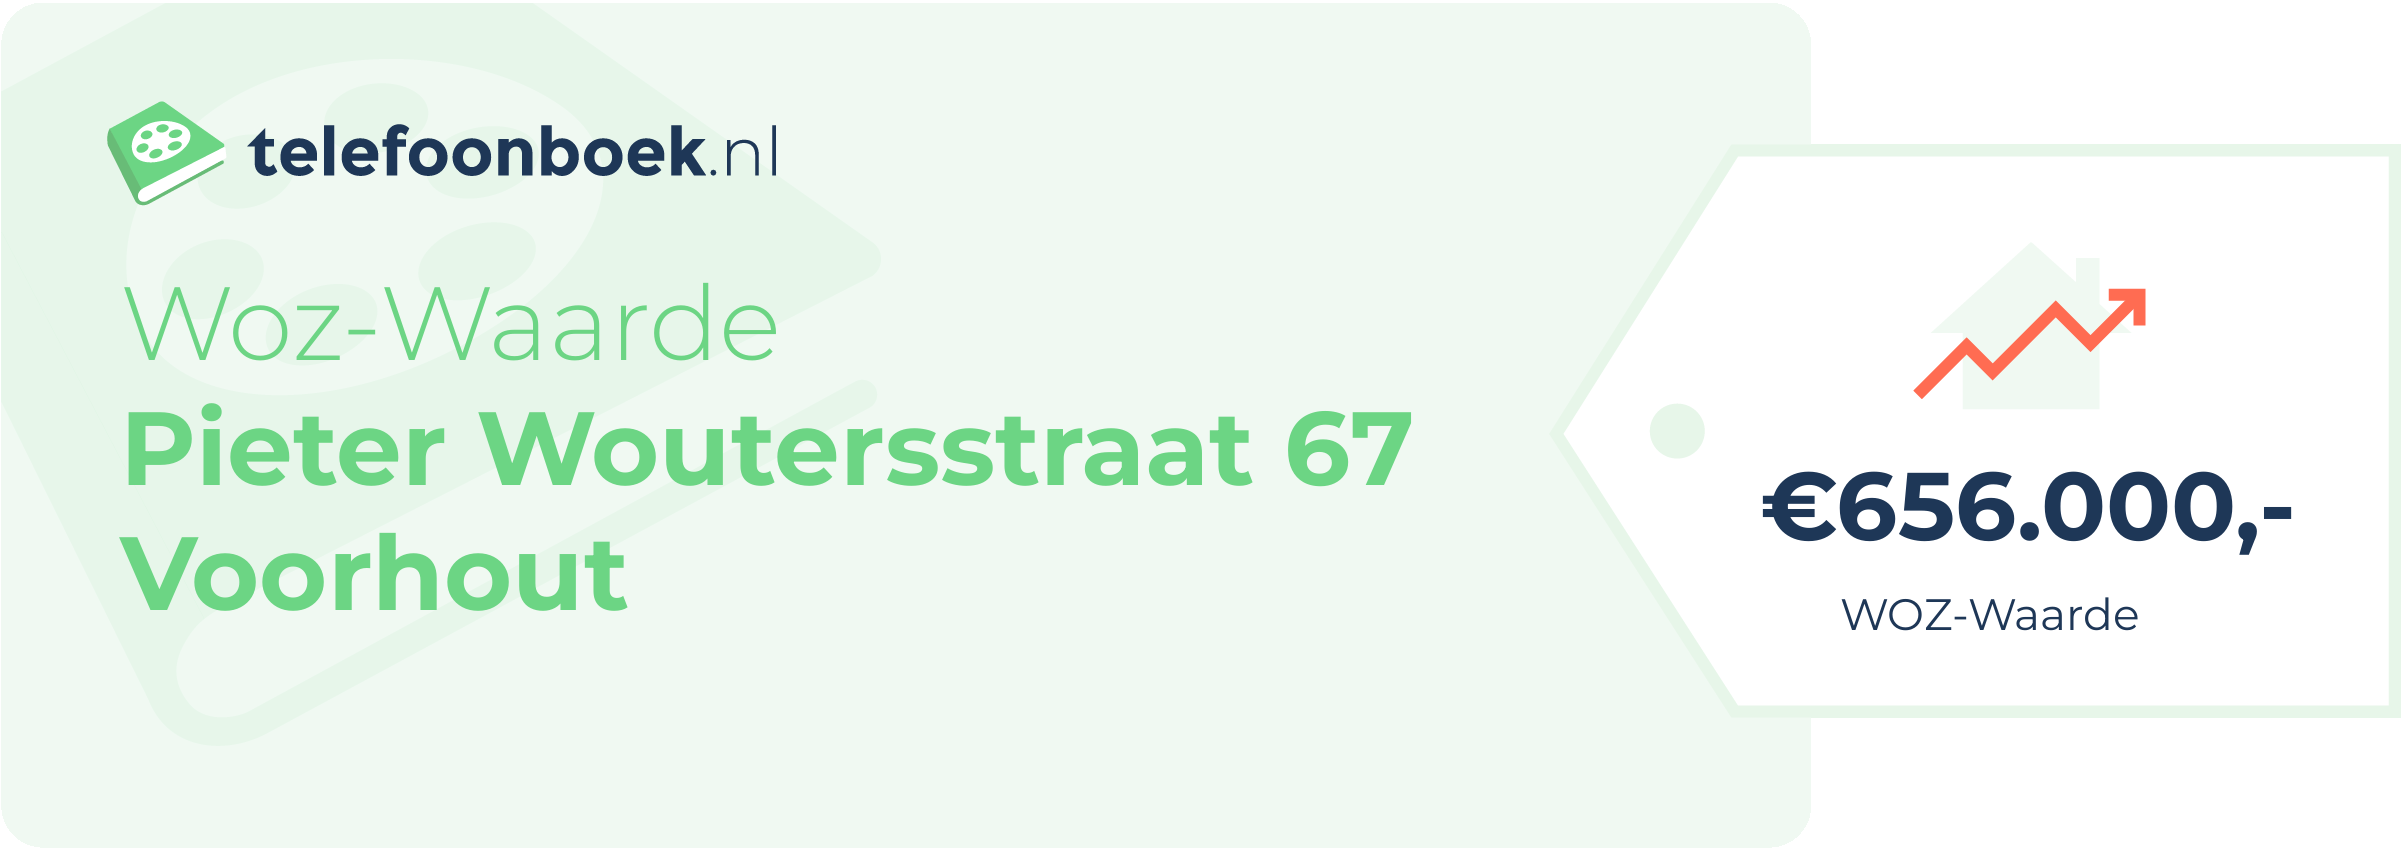 WOZ-waarde Pieter Woutersstraat 67 Voorhout